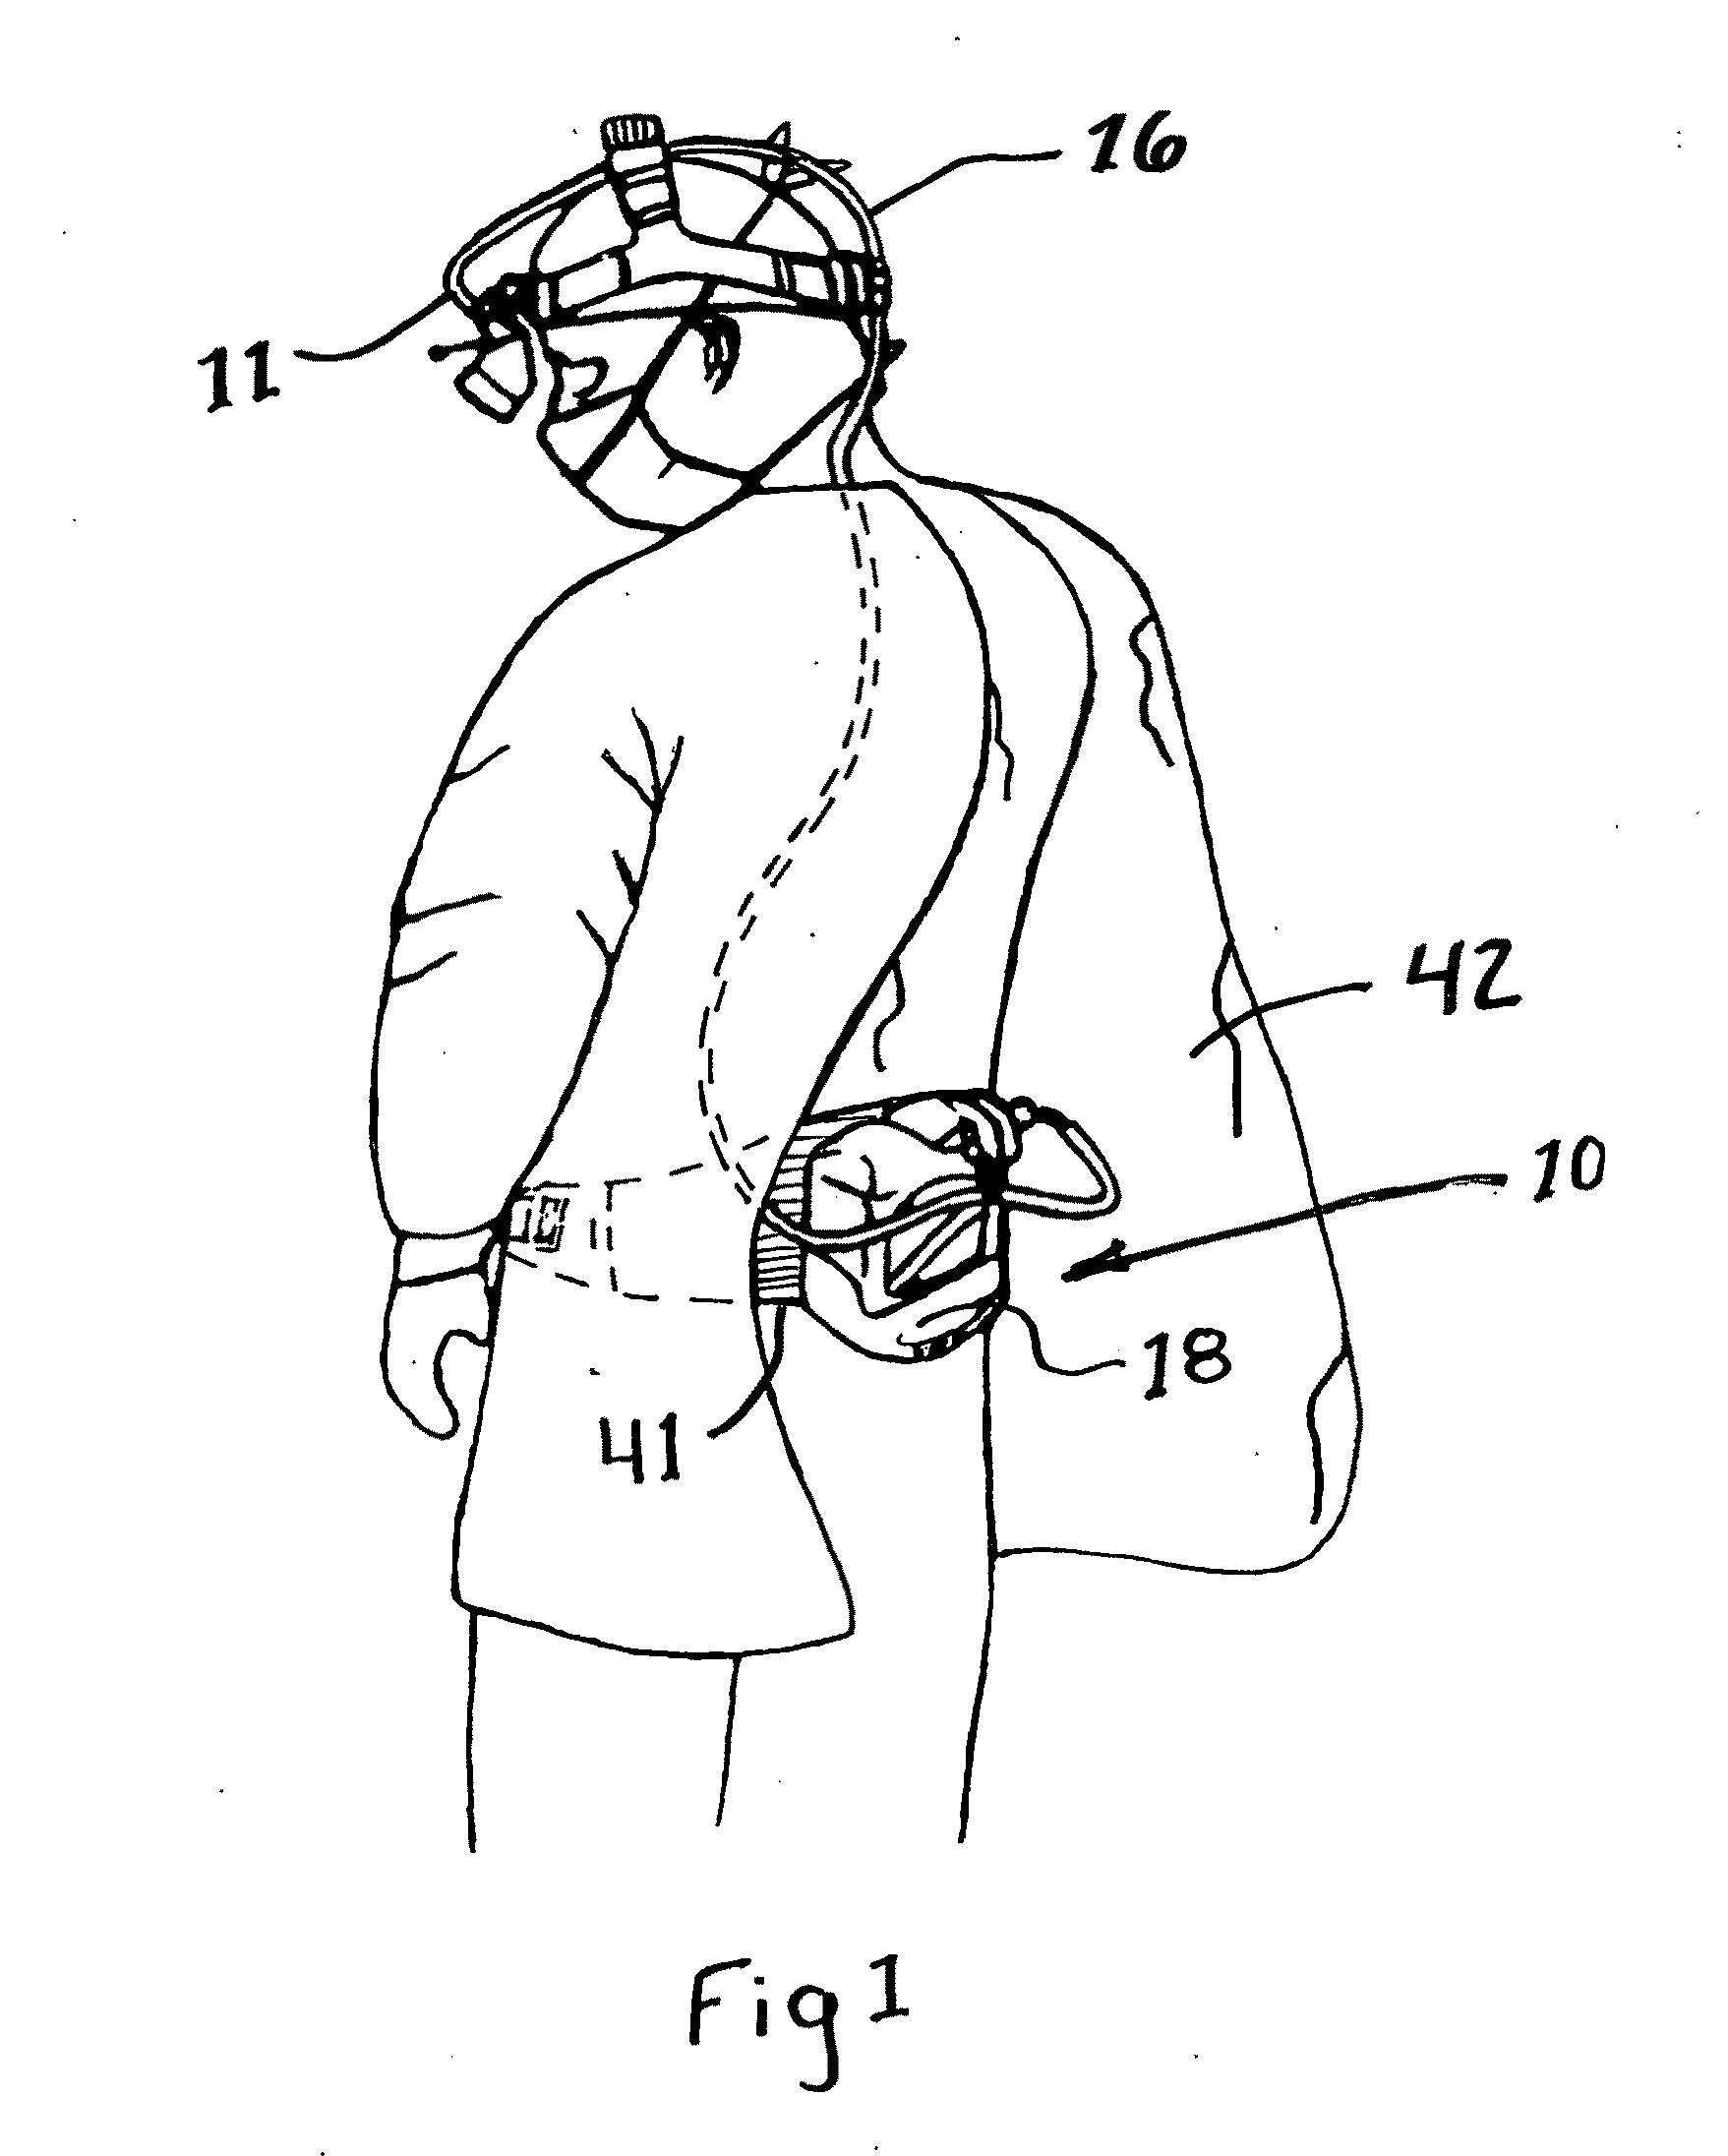 Headlight apparatus and method